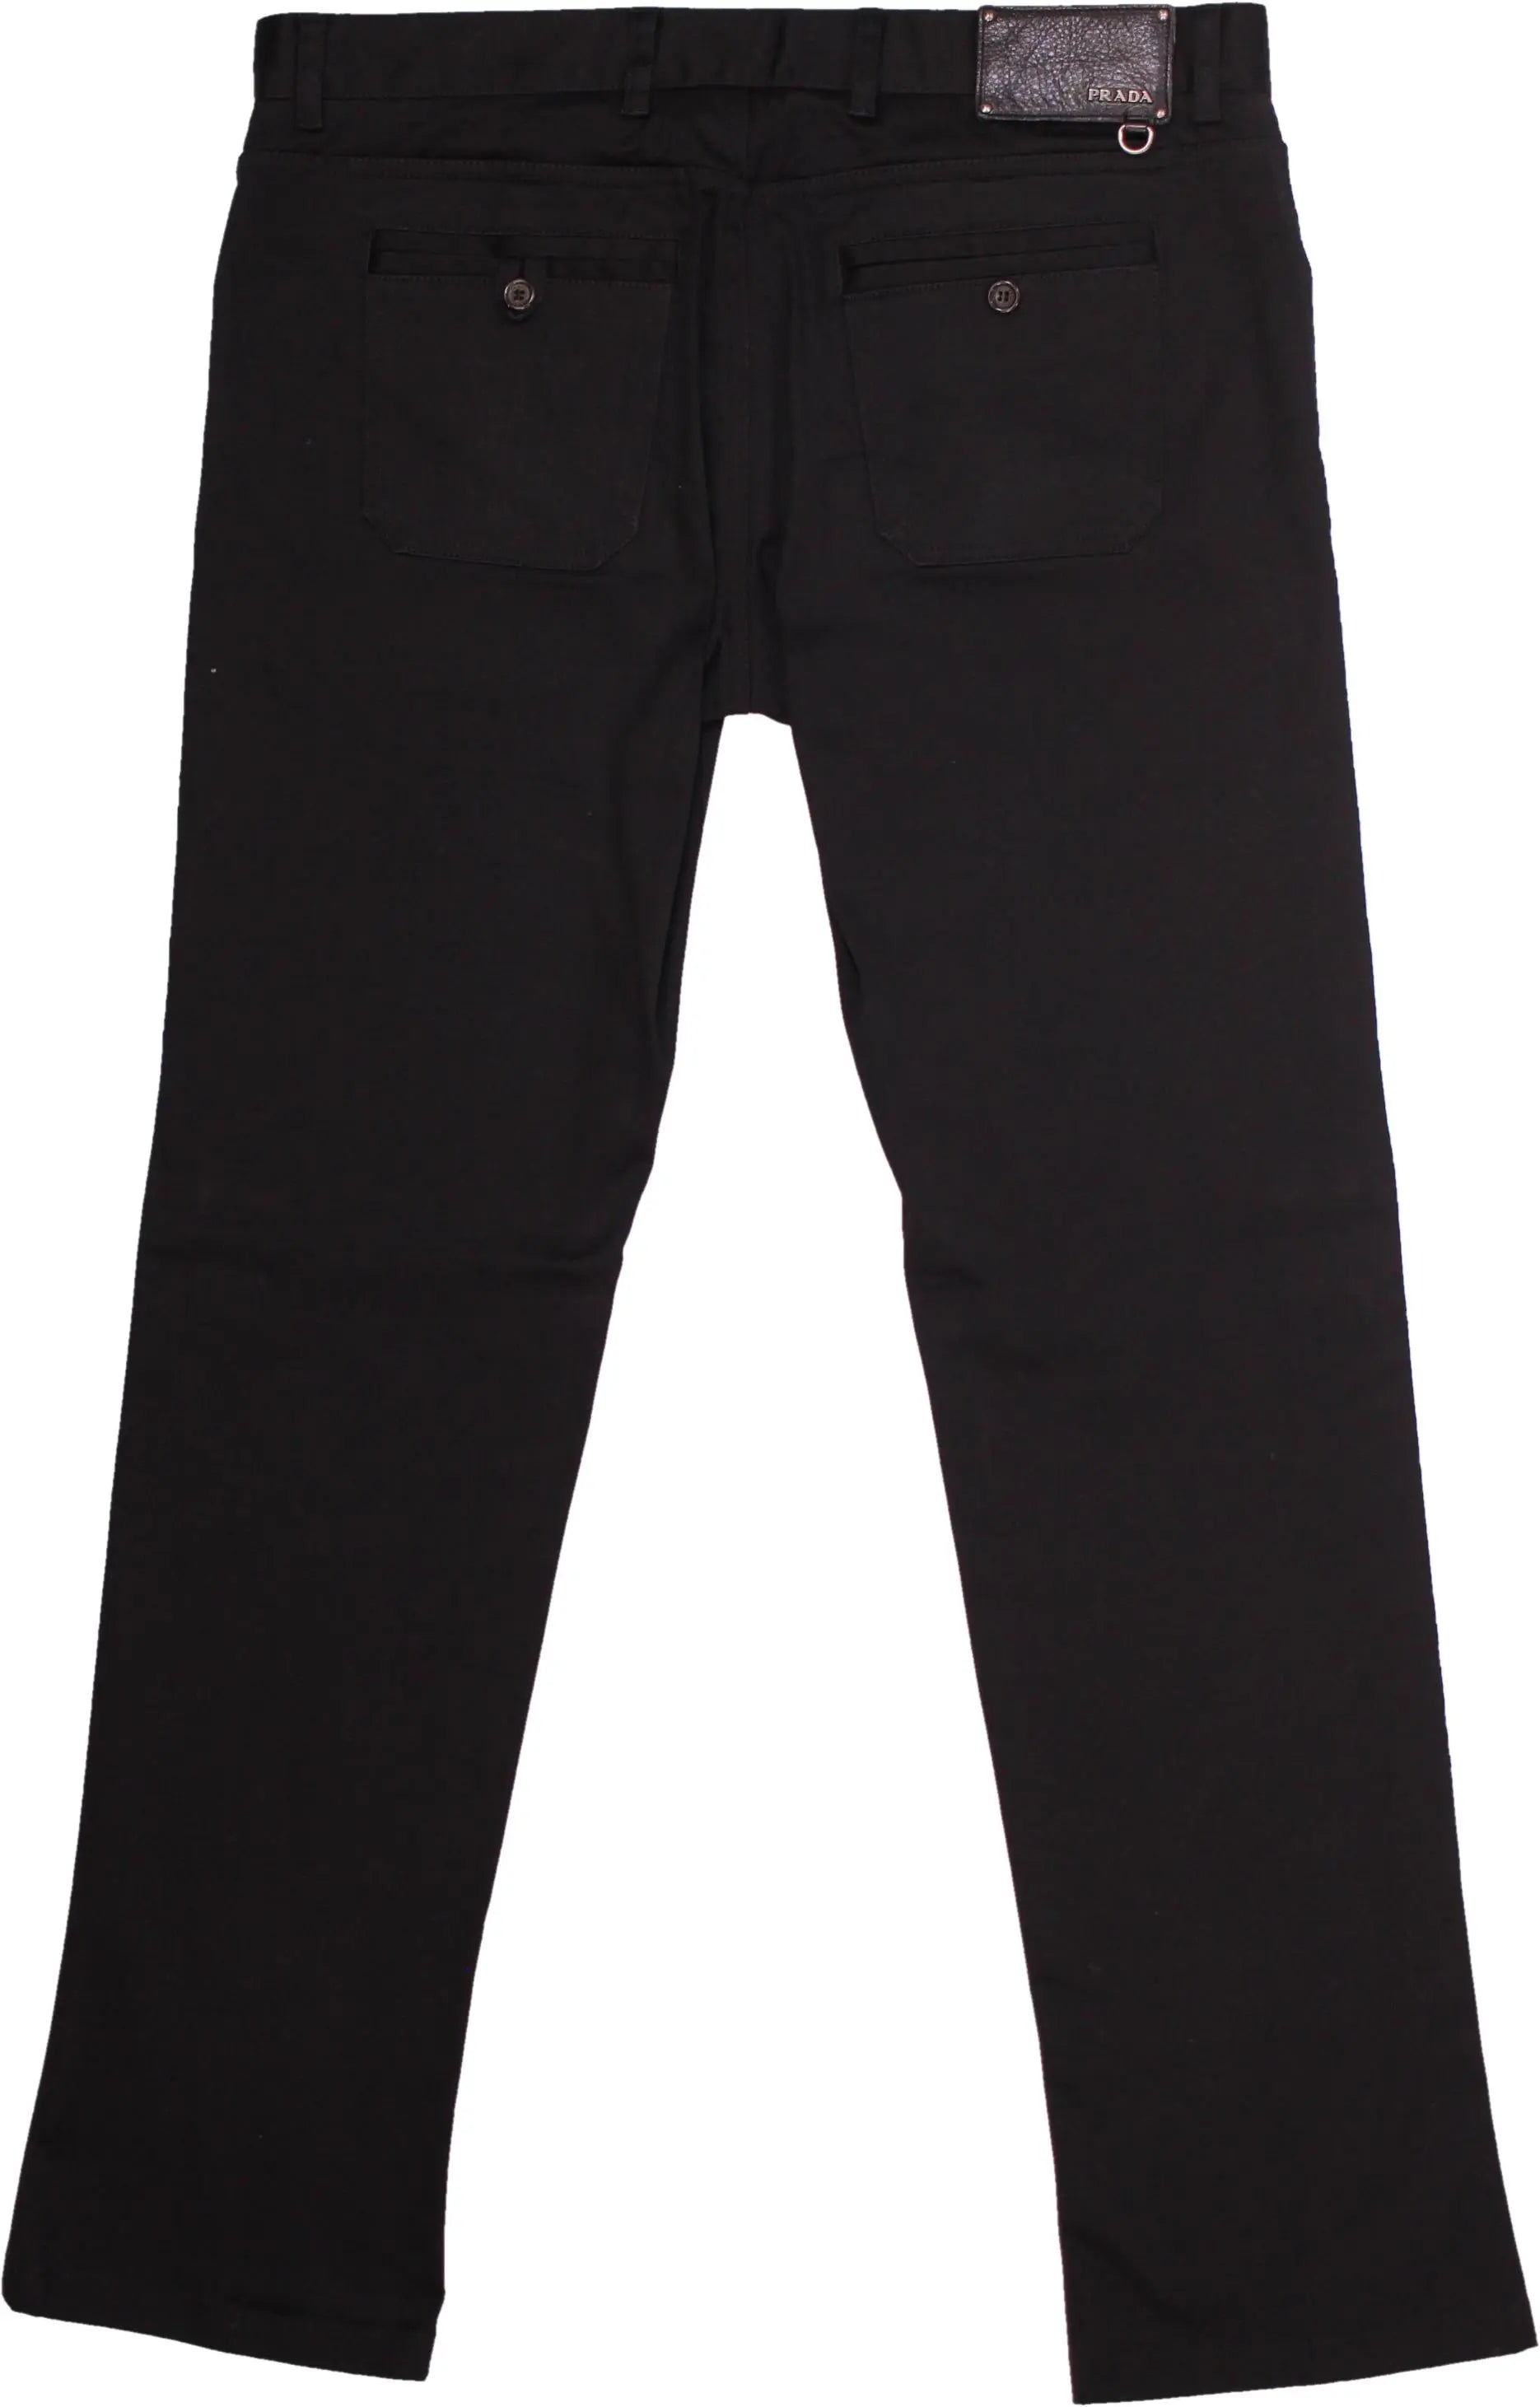 Prada - Black Pants by Prada- ThriftTale.com - Vintage and second handclothing